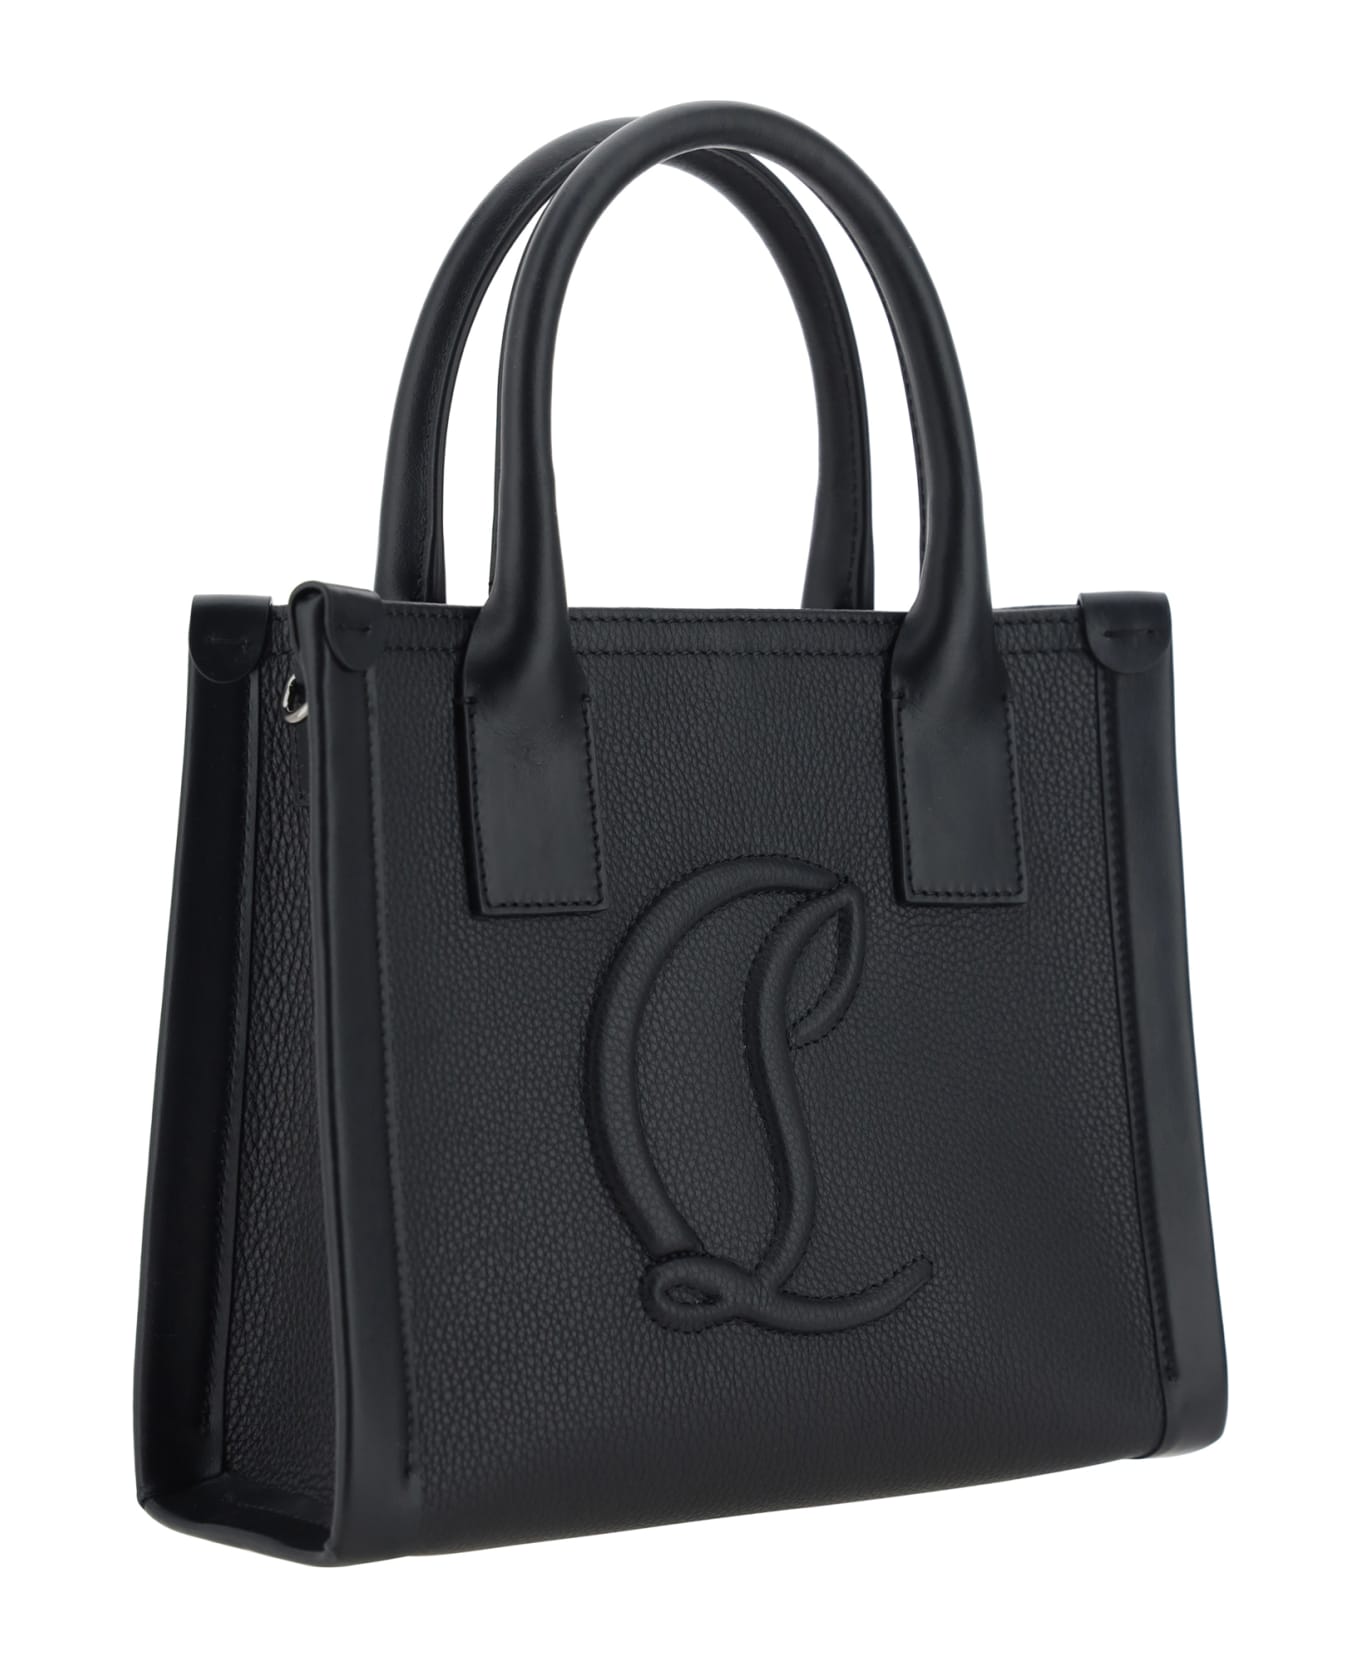 Christian Louboutin By My Side Handbag - Black/black/black